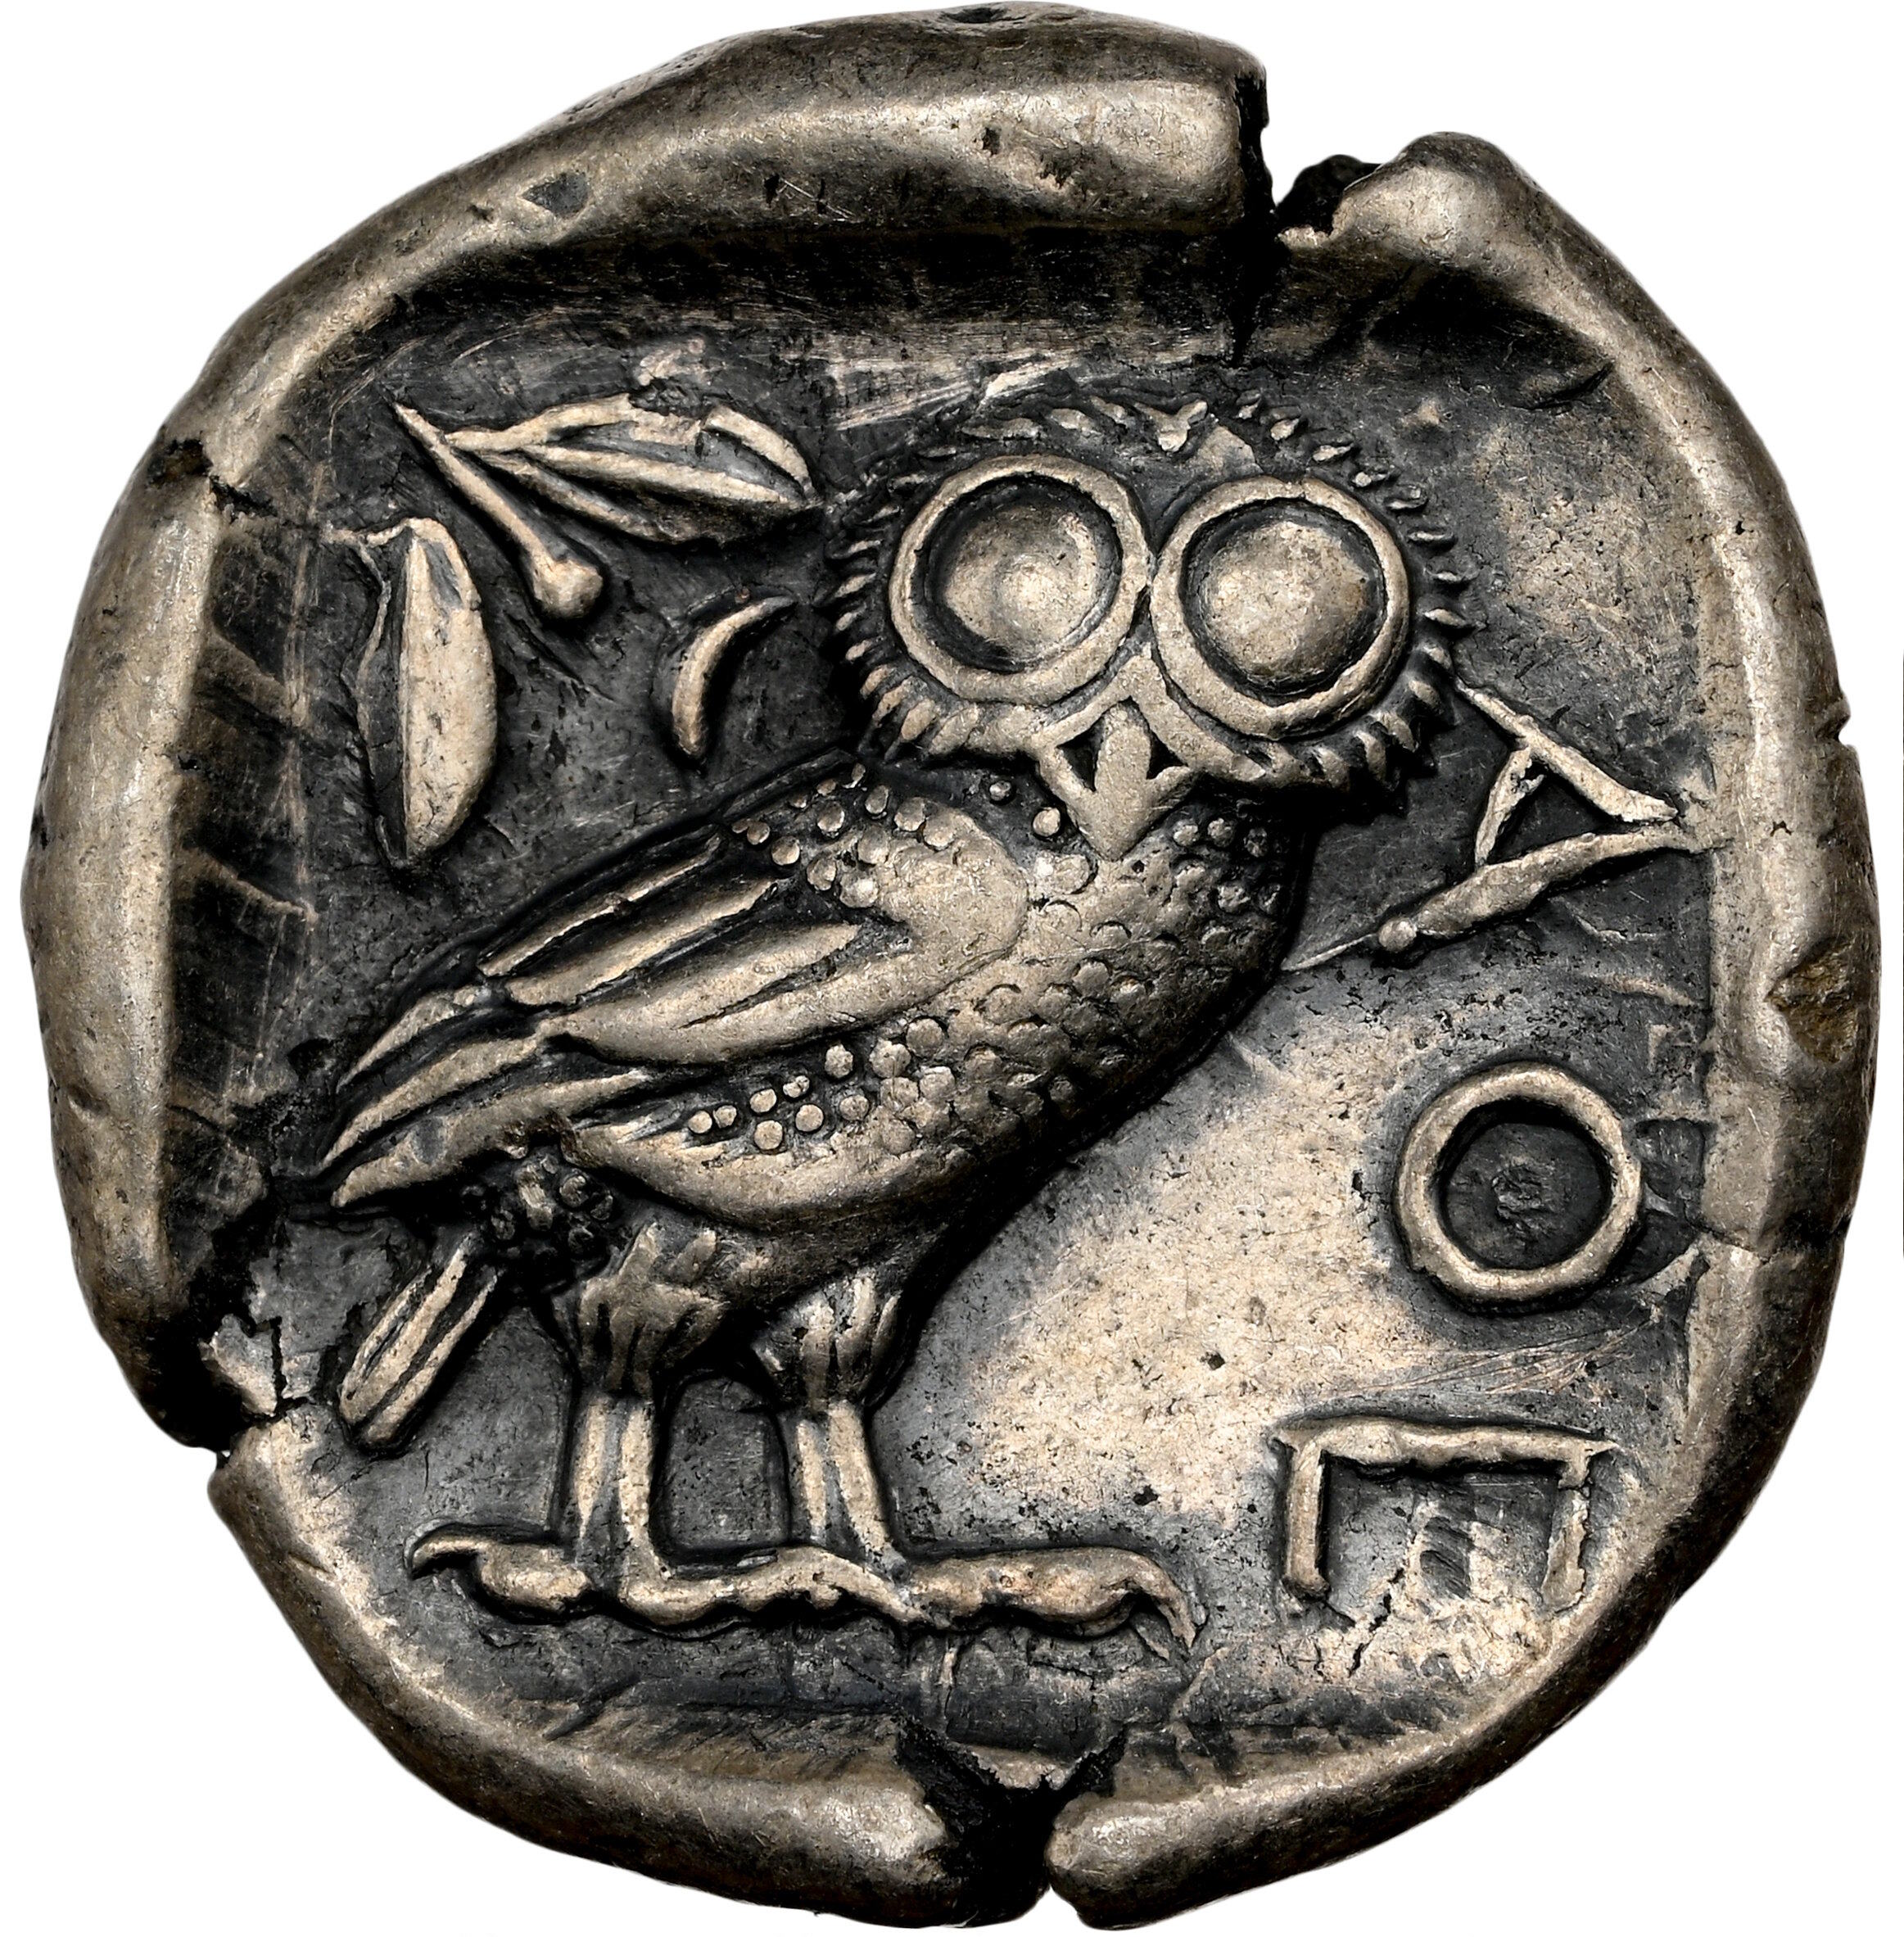 440 B.C. Ancient Greek Silver Tetradrachm Coin of Athens, Athenian